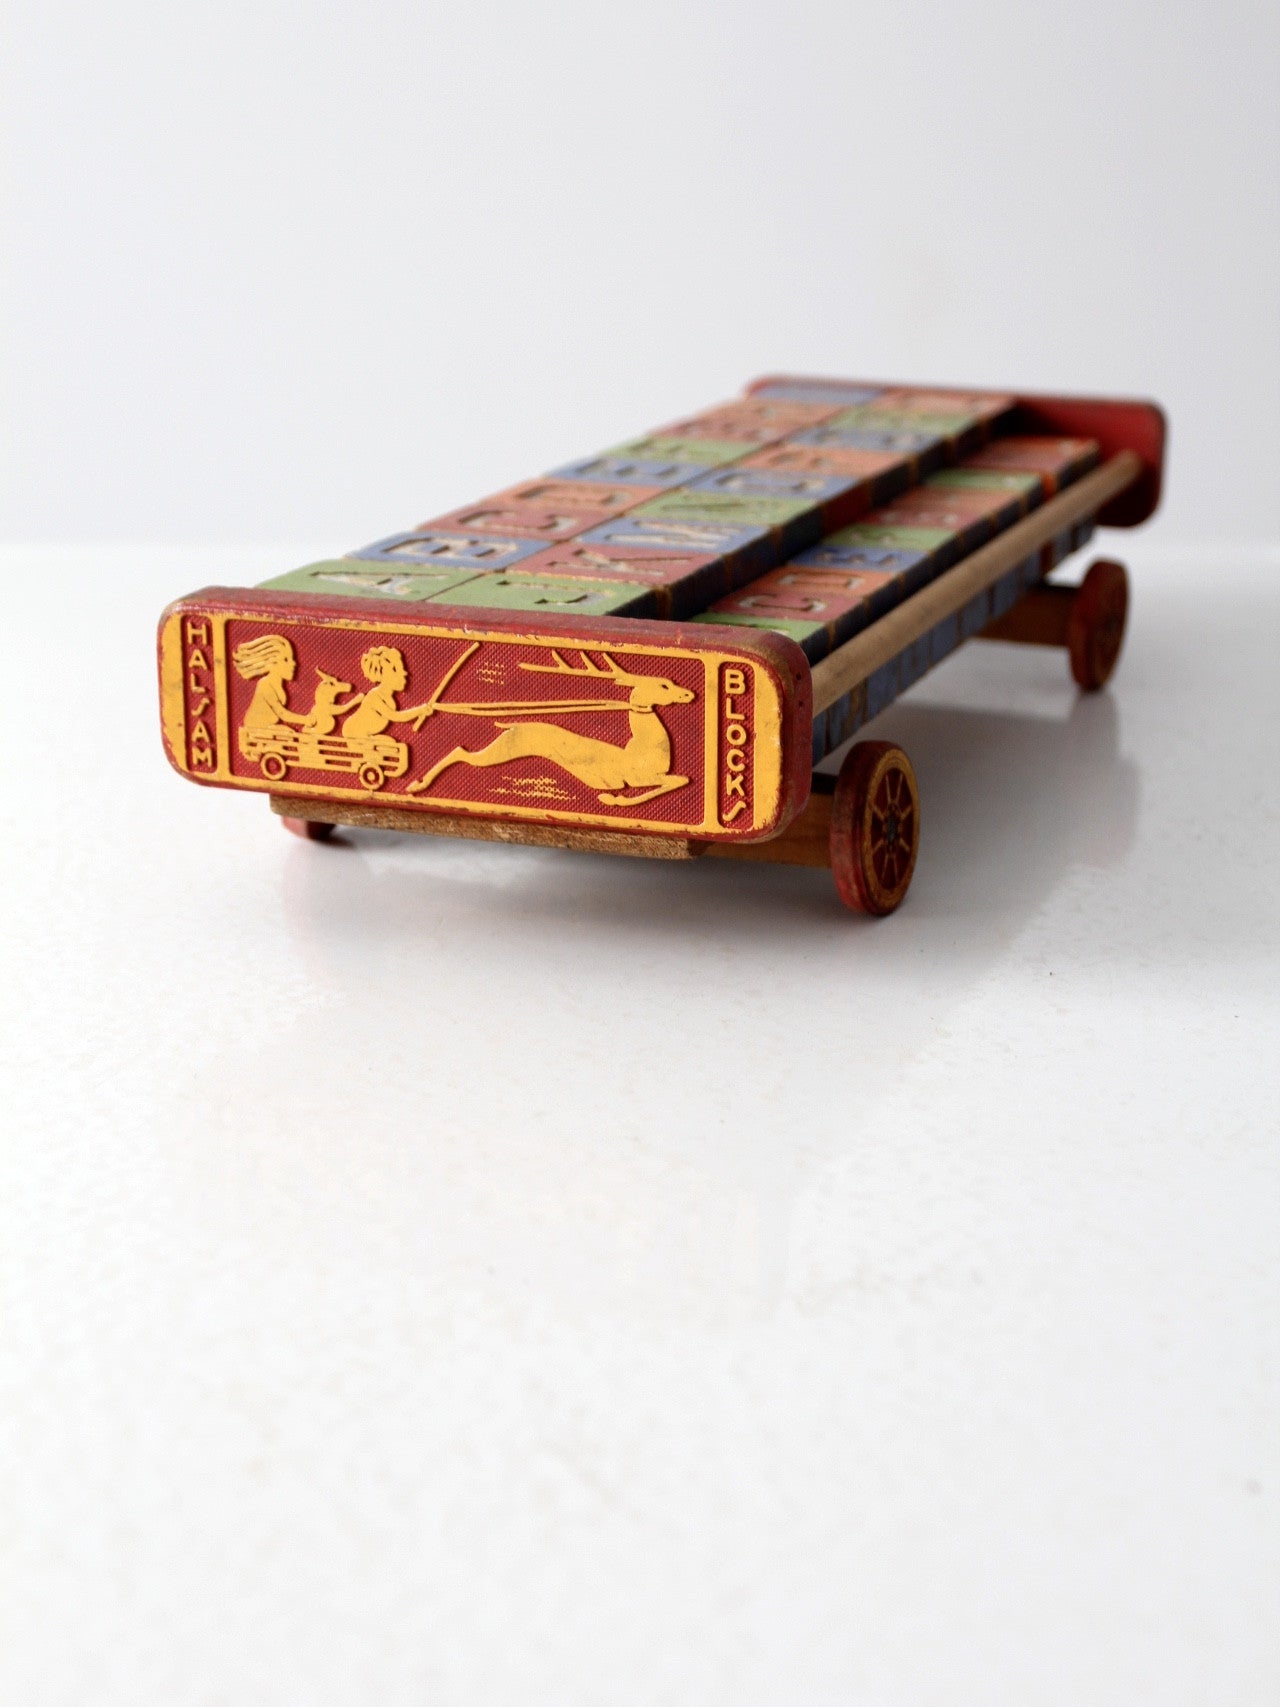 vintage Halsam toy cart with wooden blocks